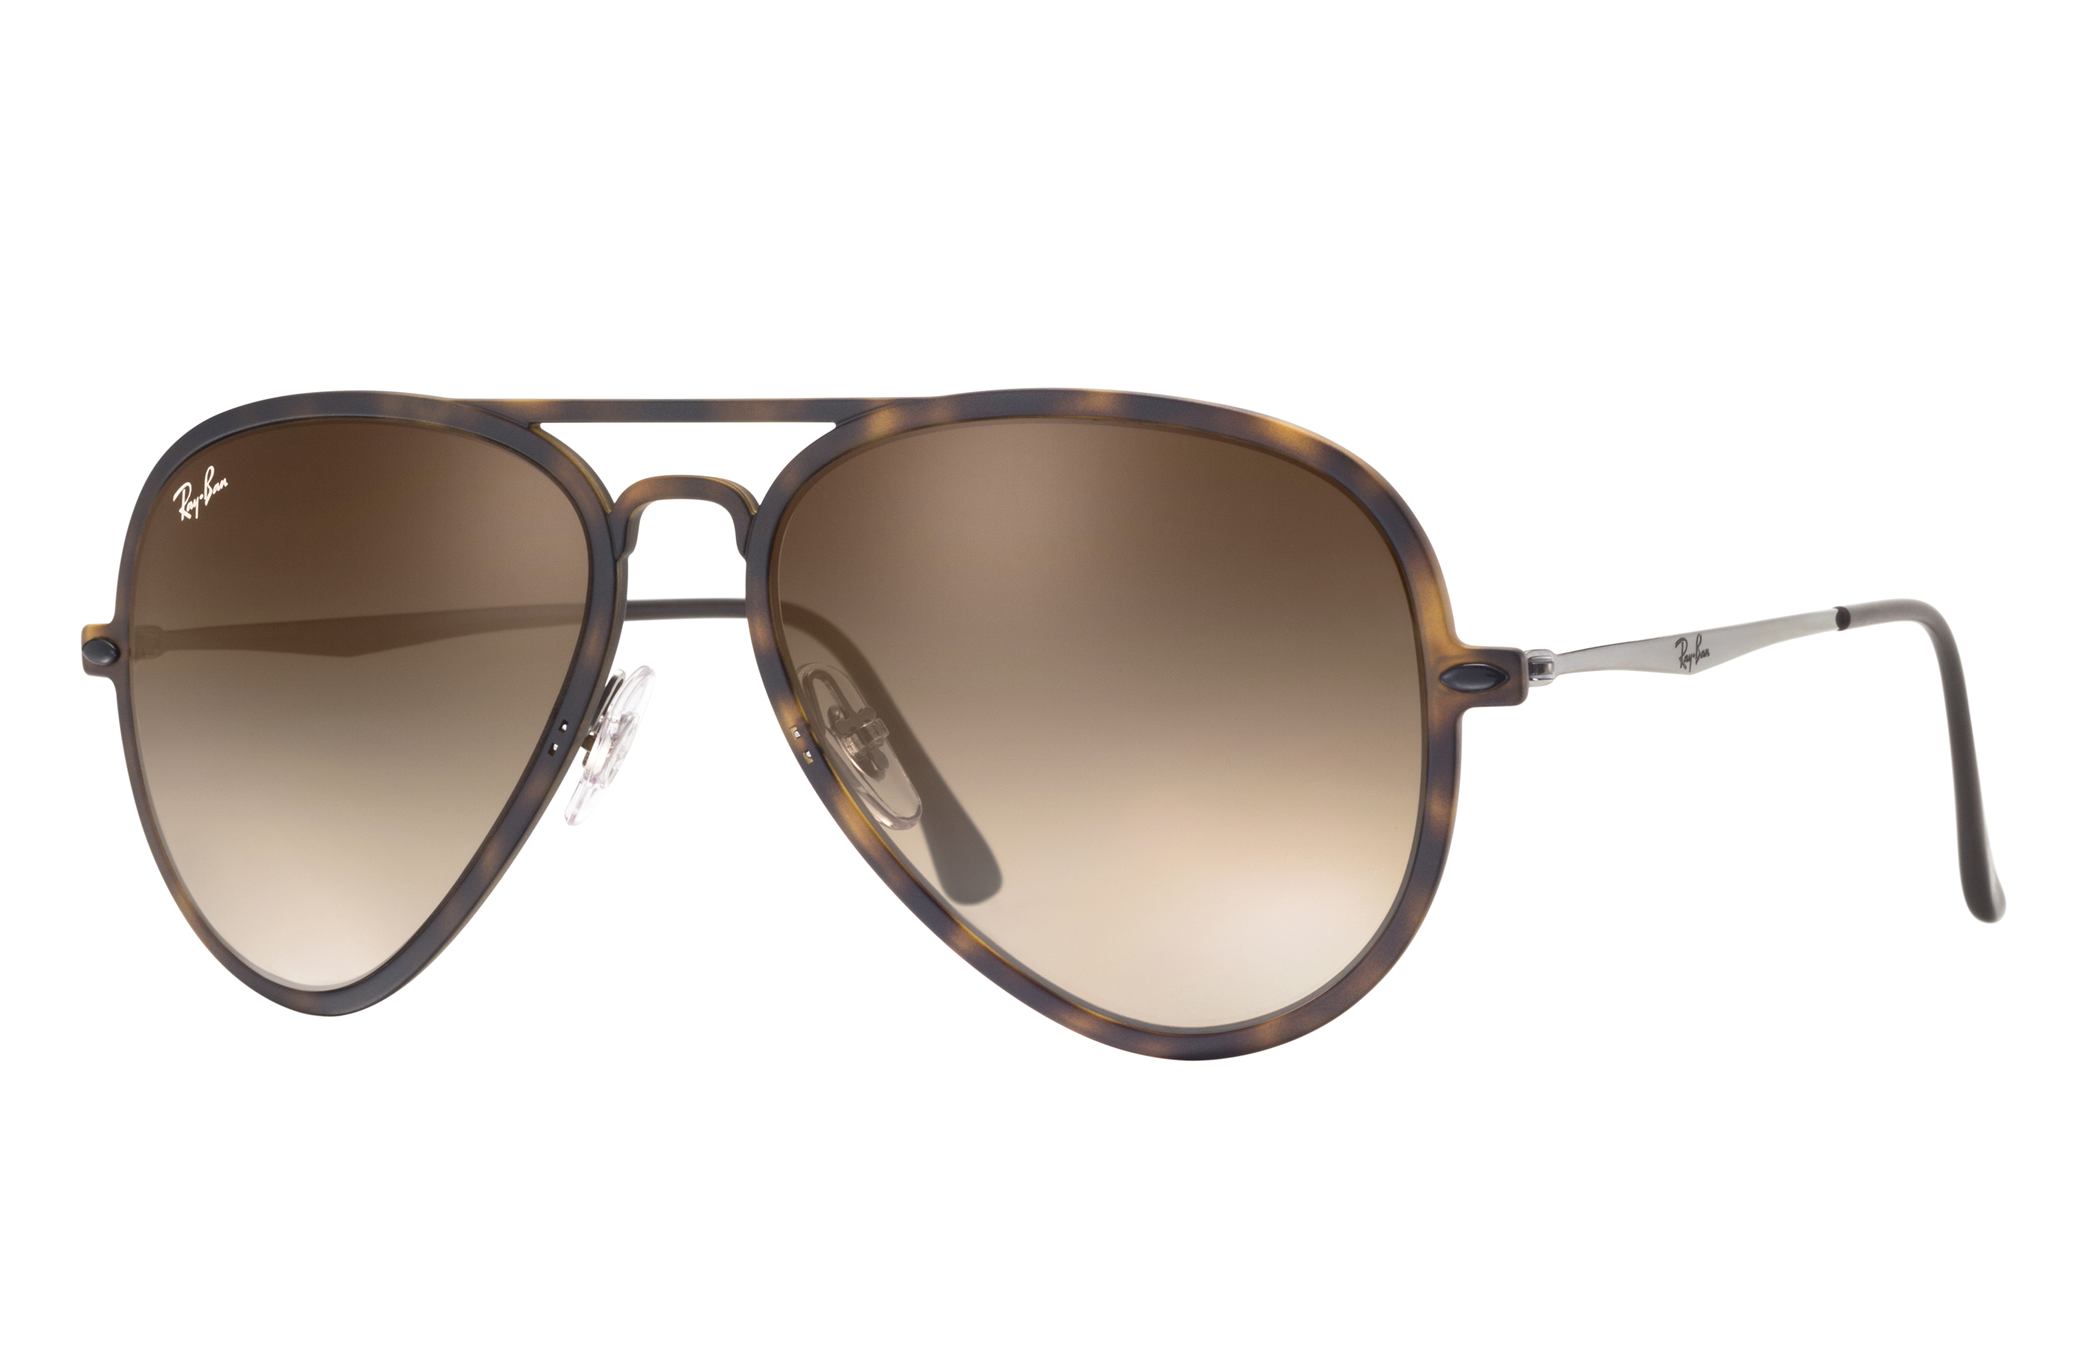 Tortoise Sunglasses in Brown and Aviator Light Ray Ii | Ray-Ban®